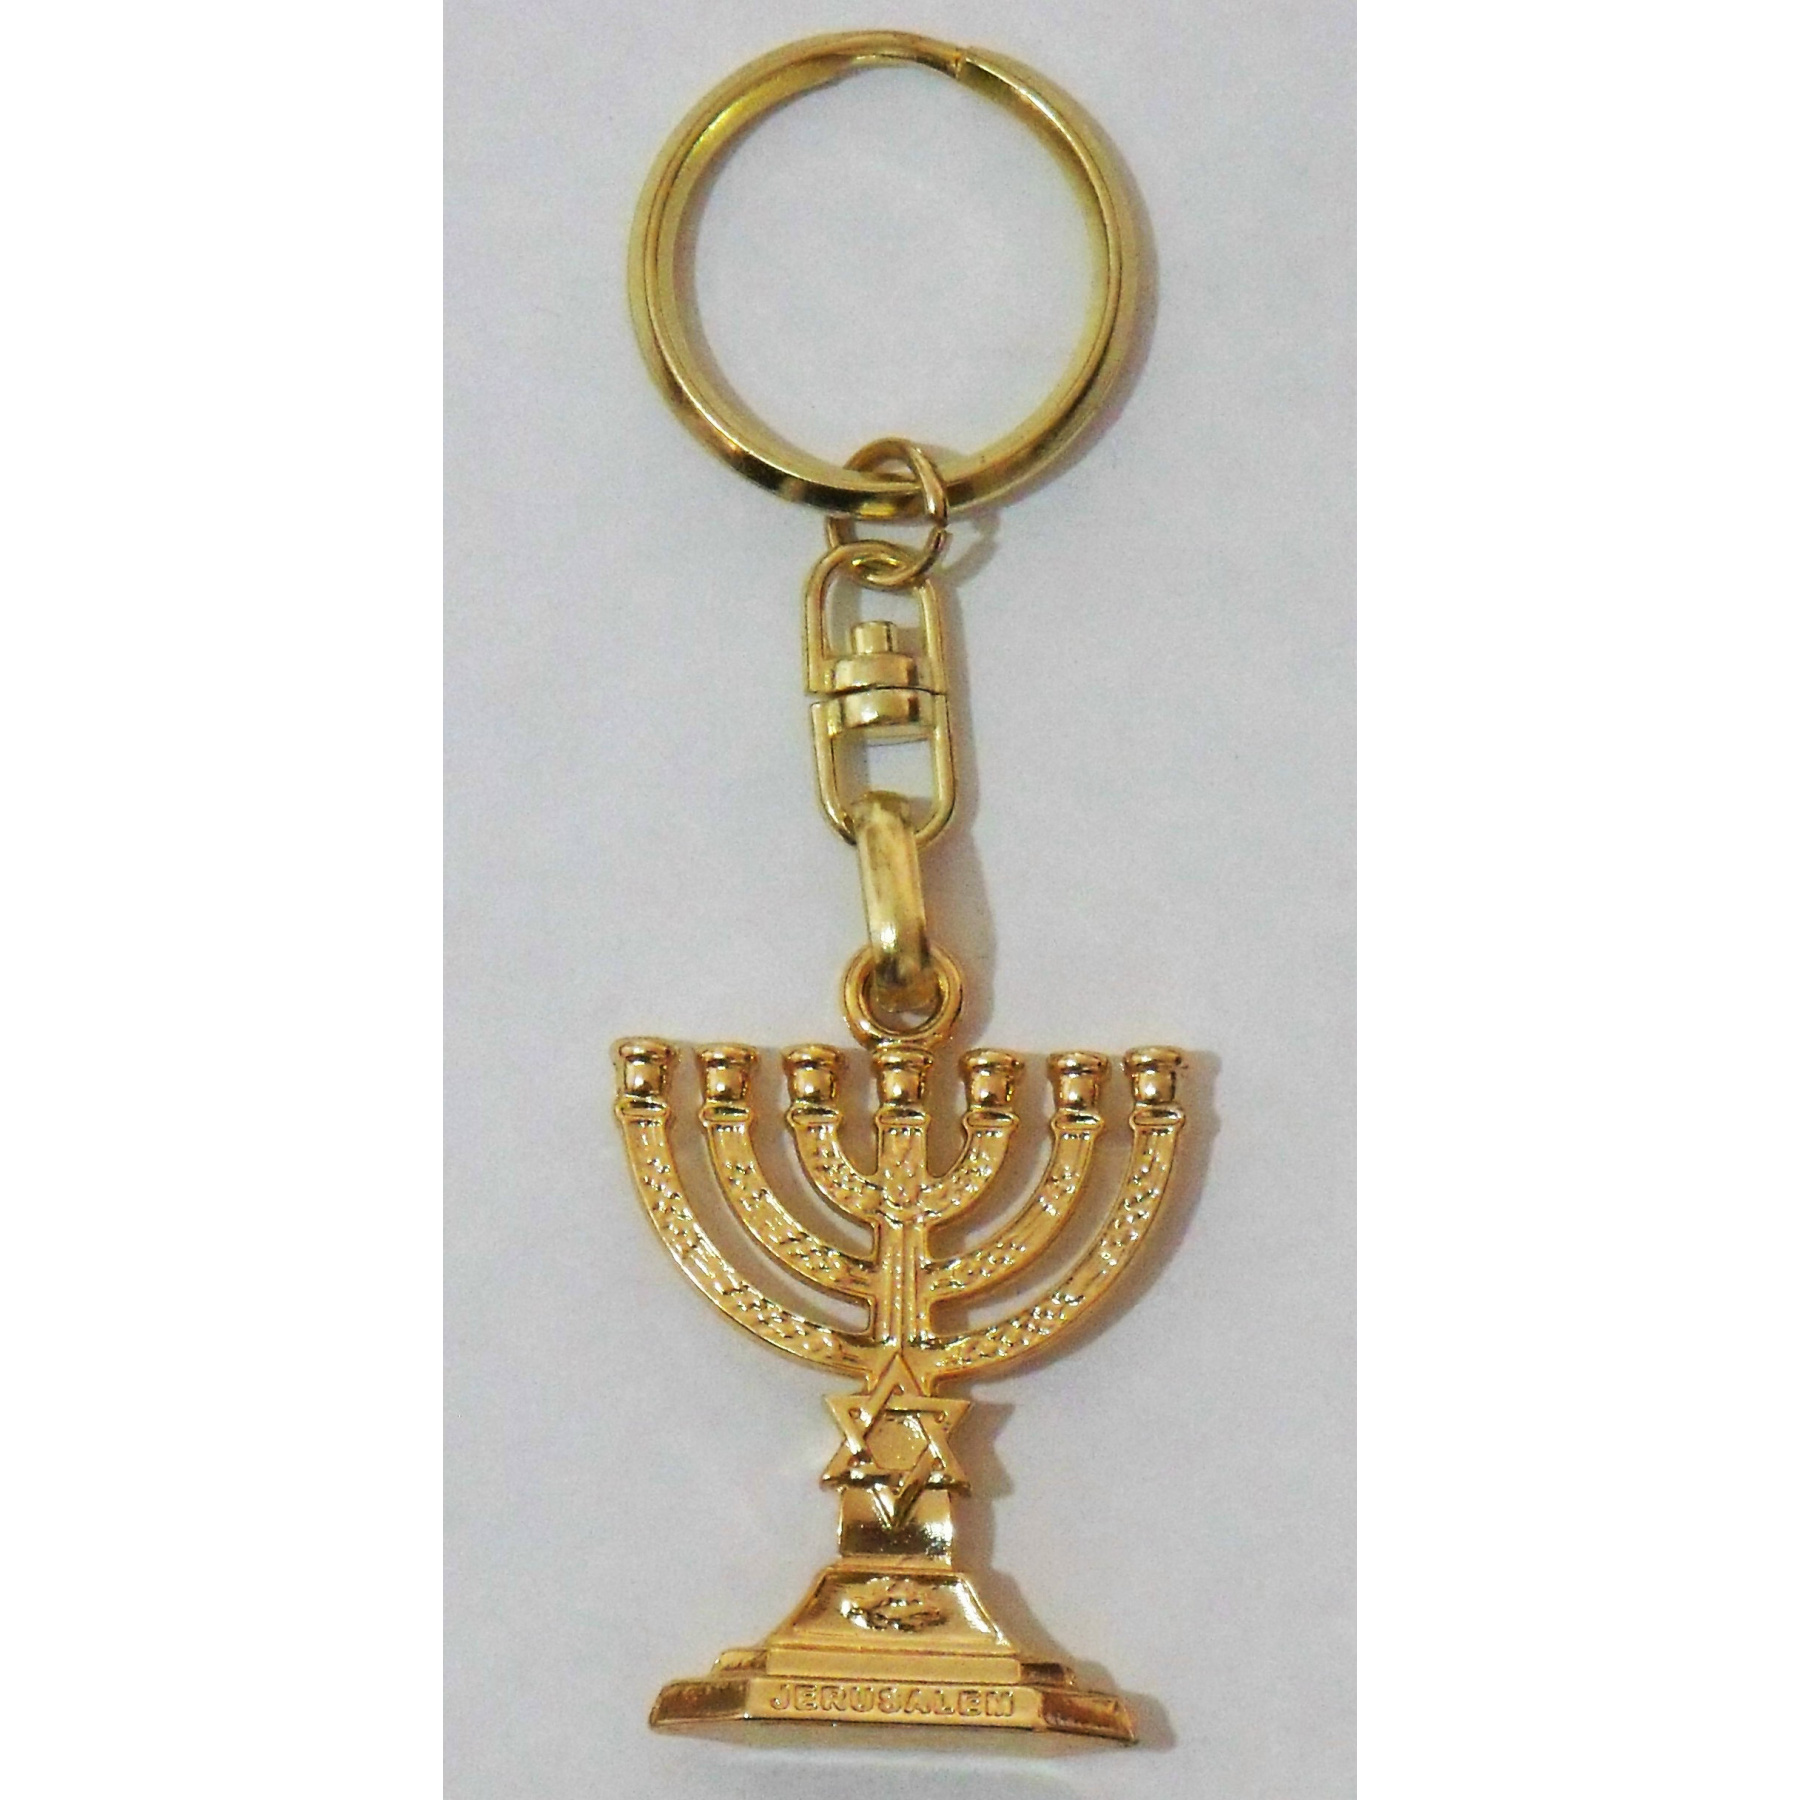 Menorah with the Star of David keychain